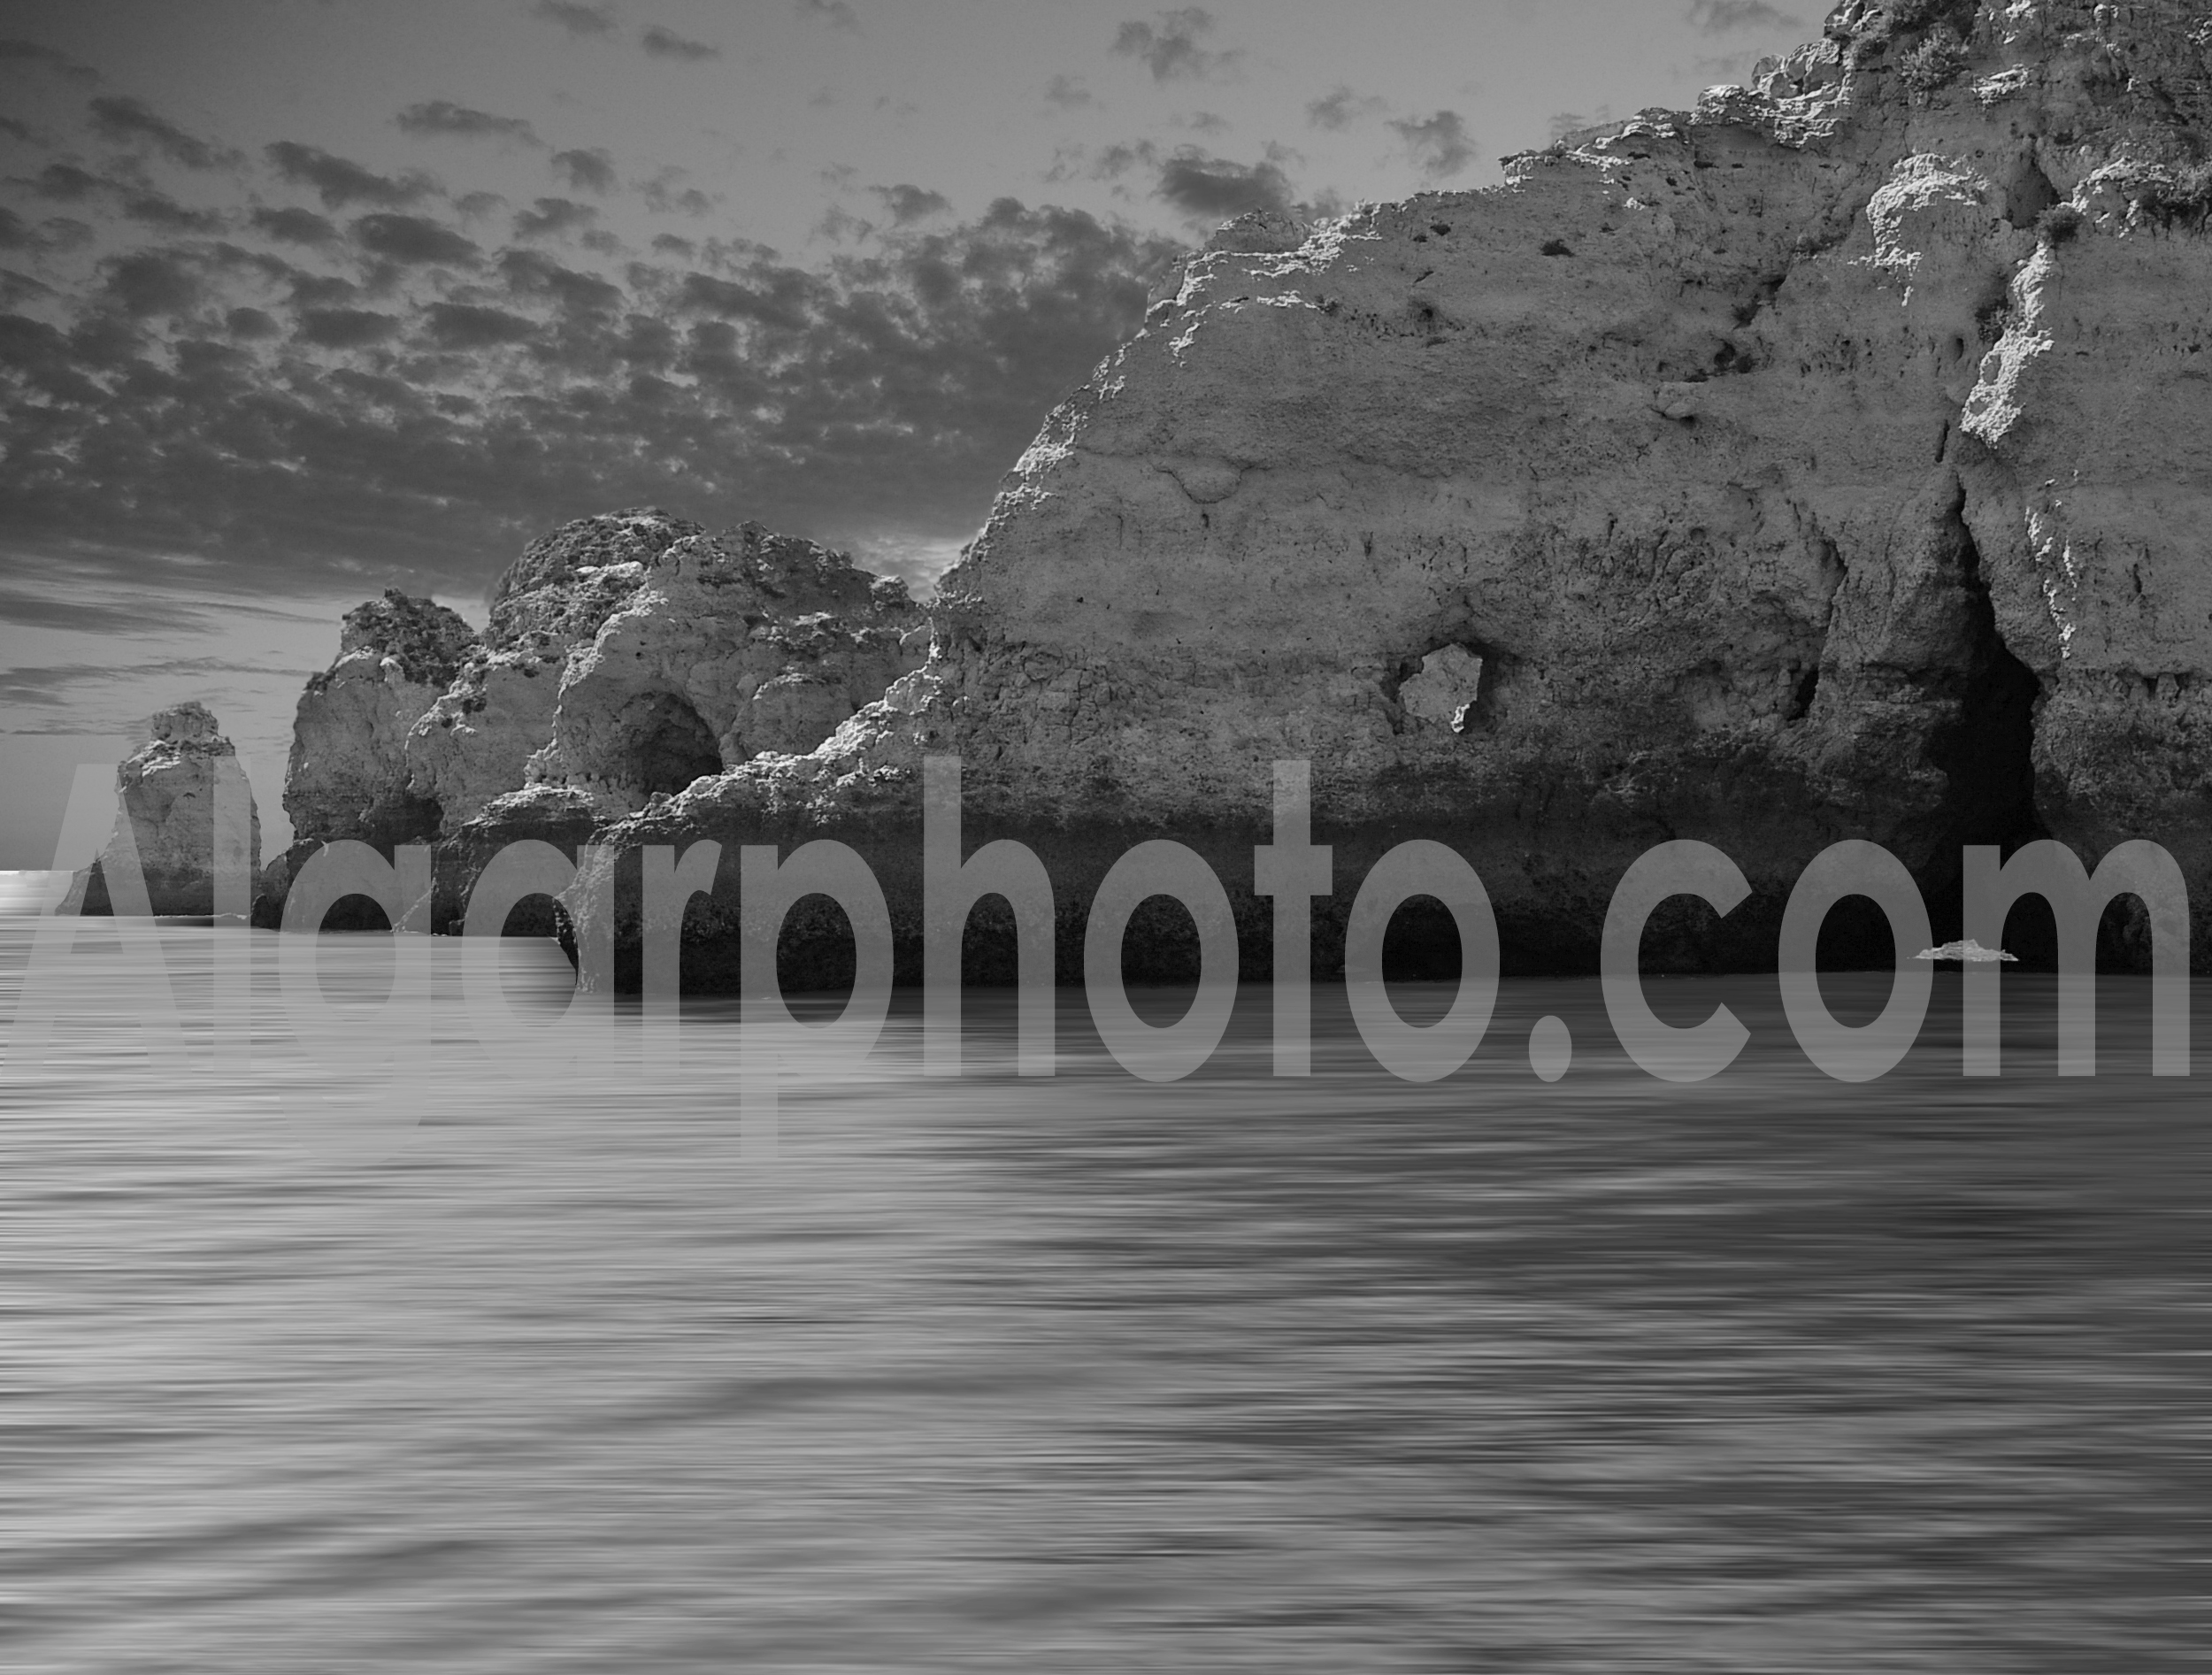 Algarve photography mono images by algarphoto